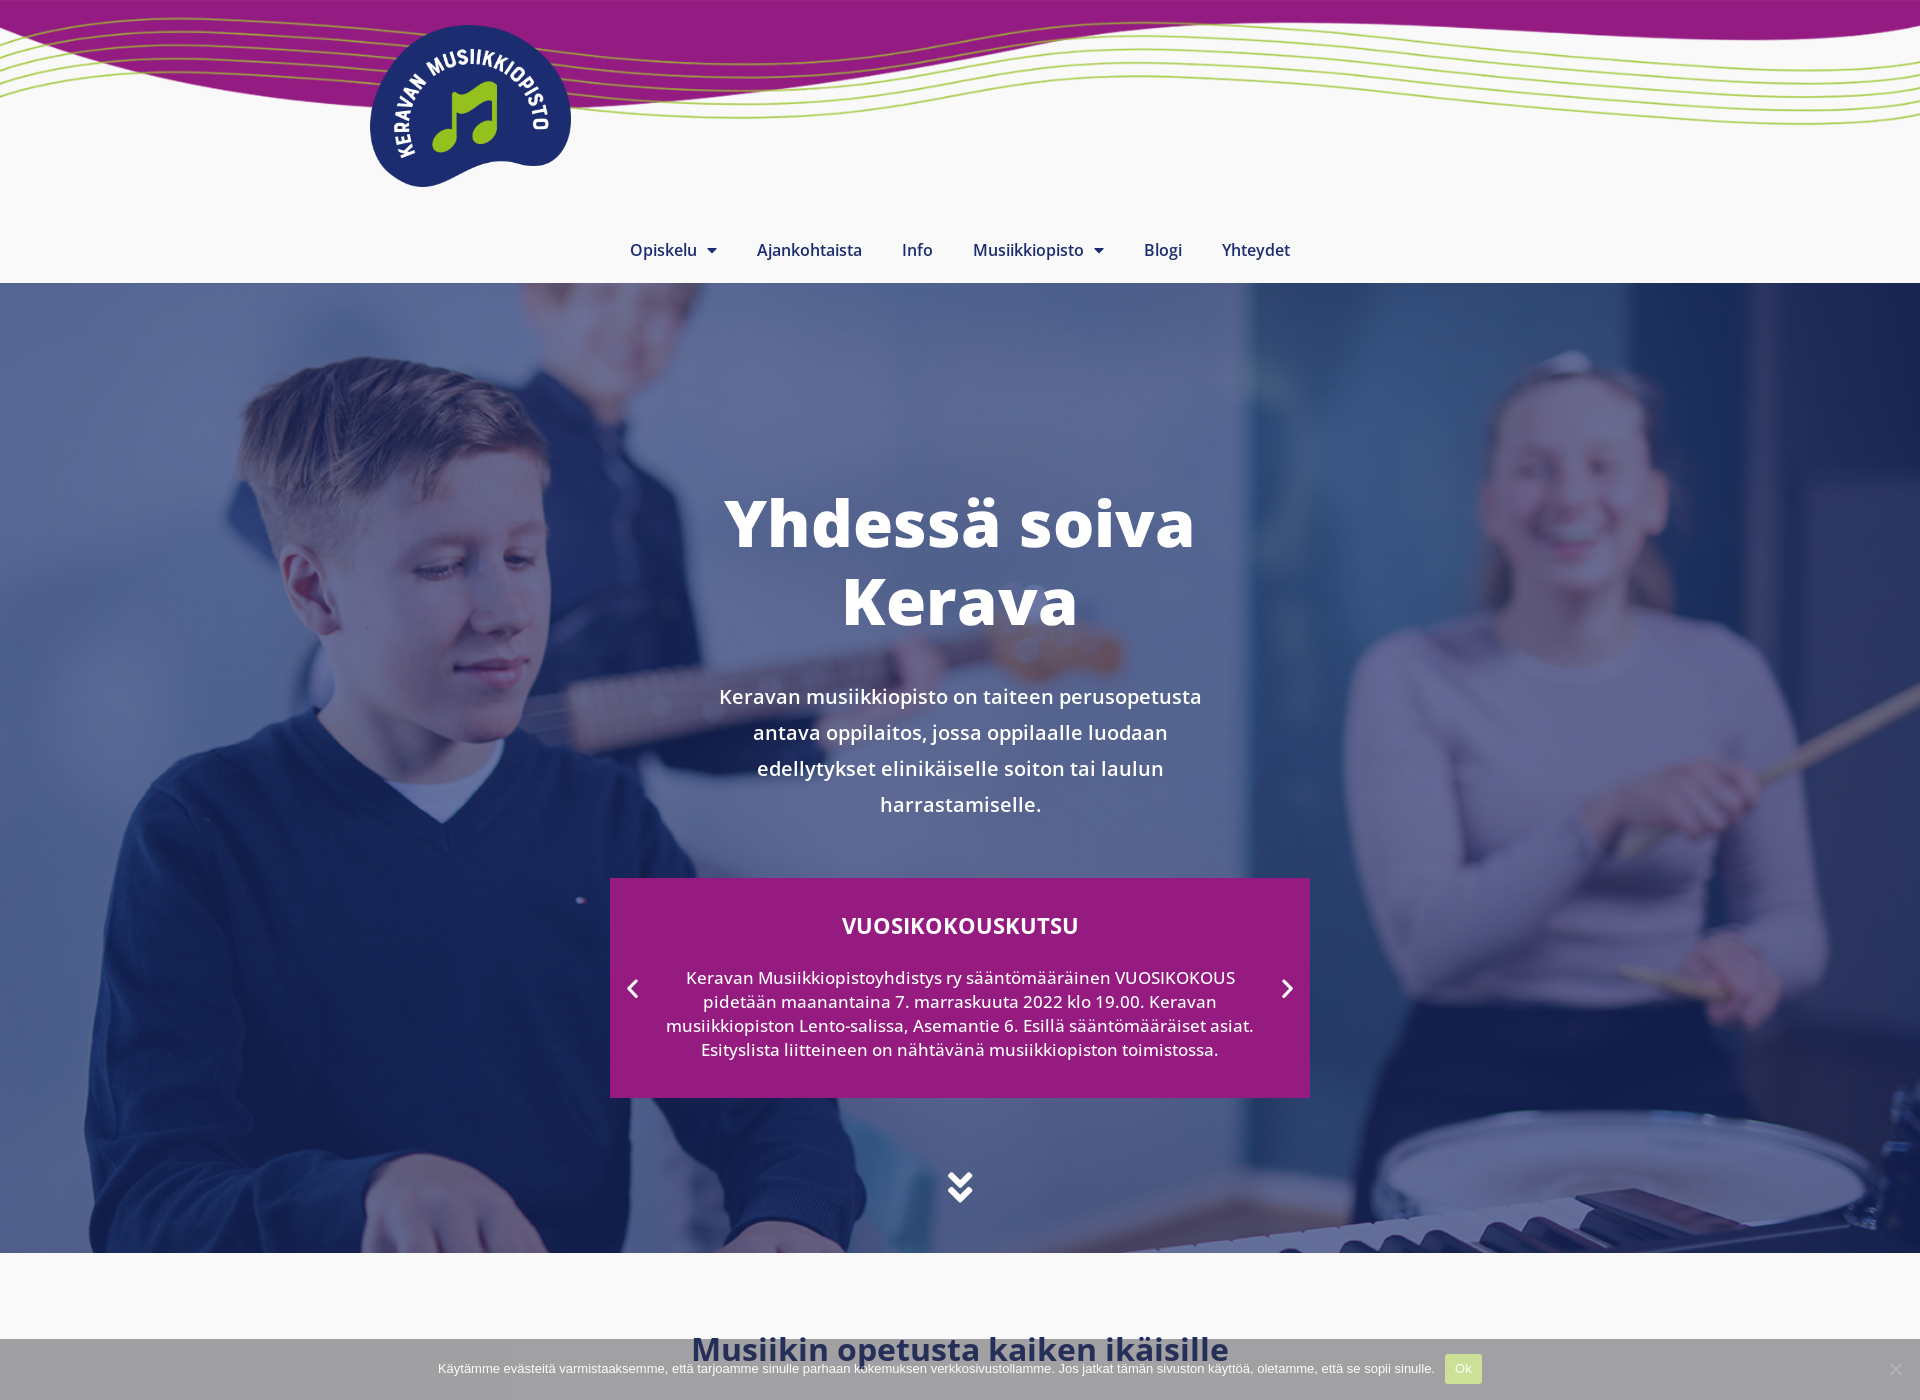 Skärmdump för keravanmusiikkiopisto.fi